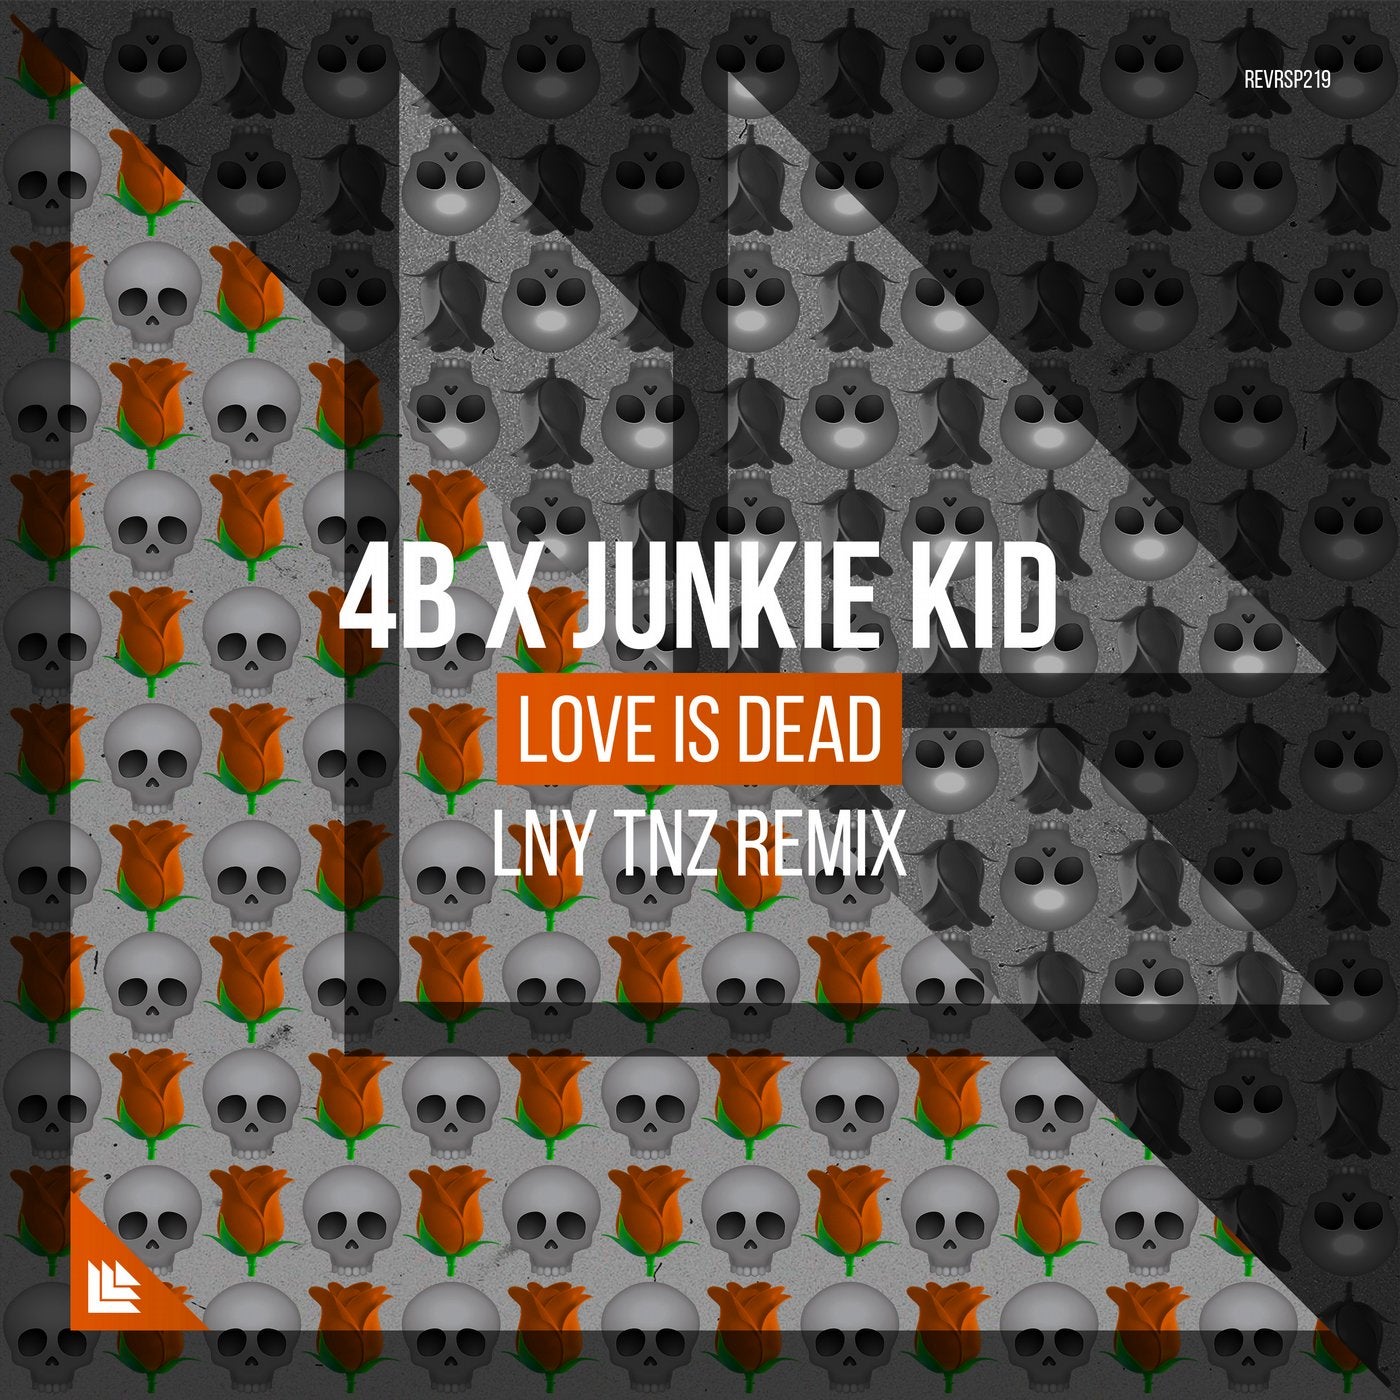 Love Is Dead - LNY TNZ Remix